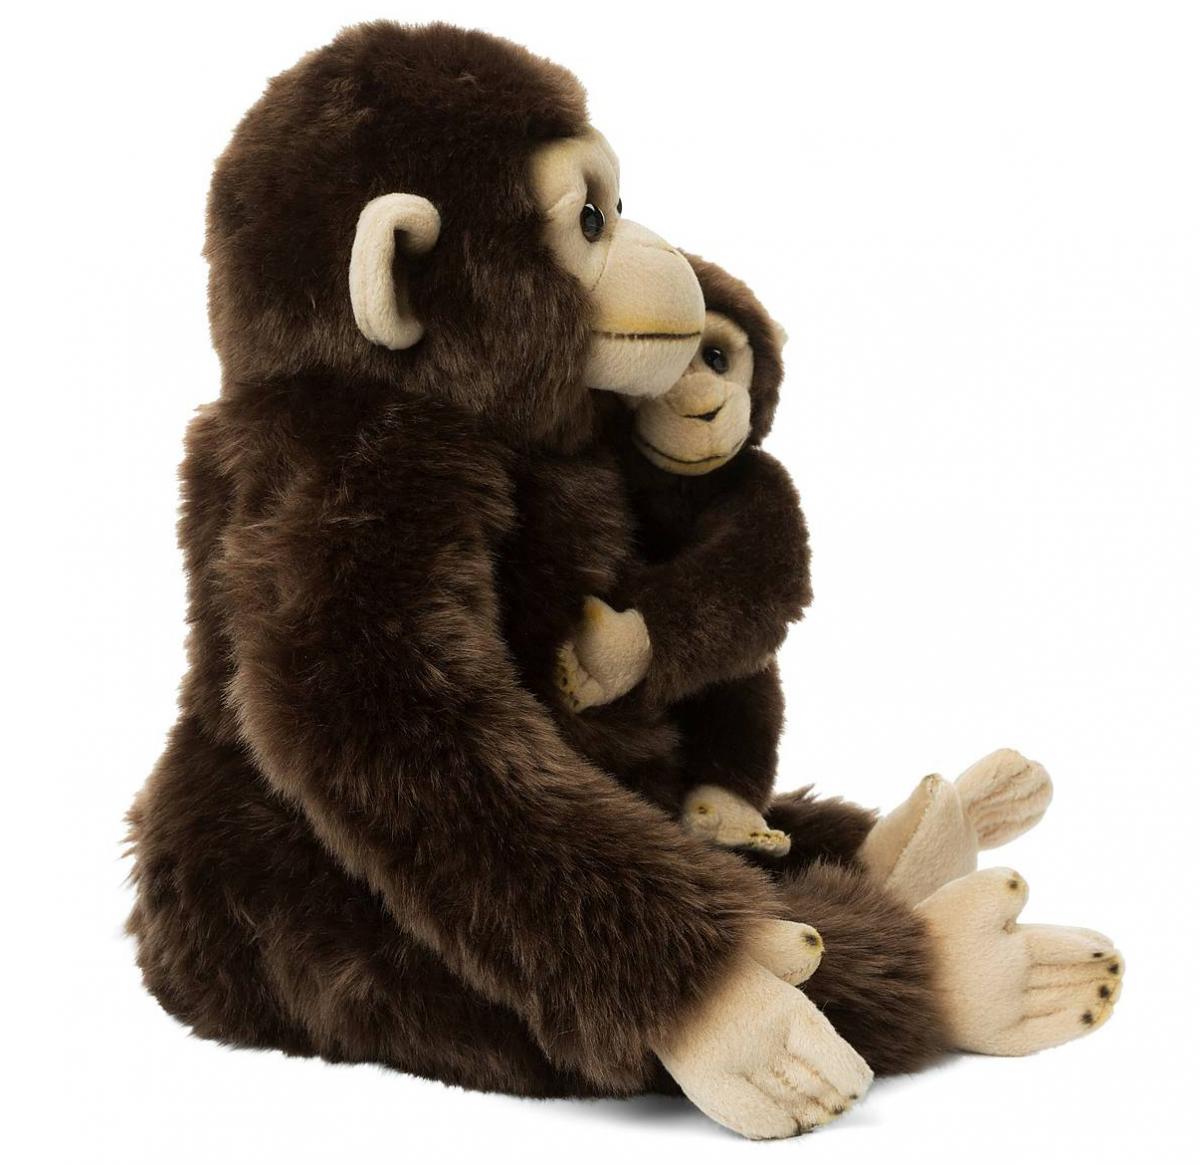 WWF (Vrldsnaturfonden) Schimpans med baby - WWF (Vrldsnaturfonden)